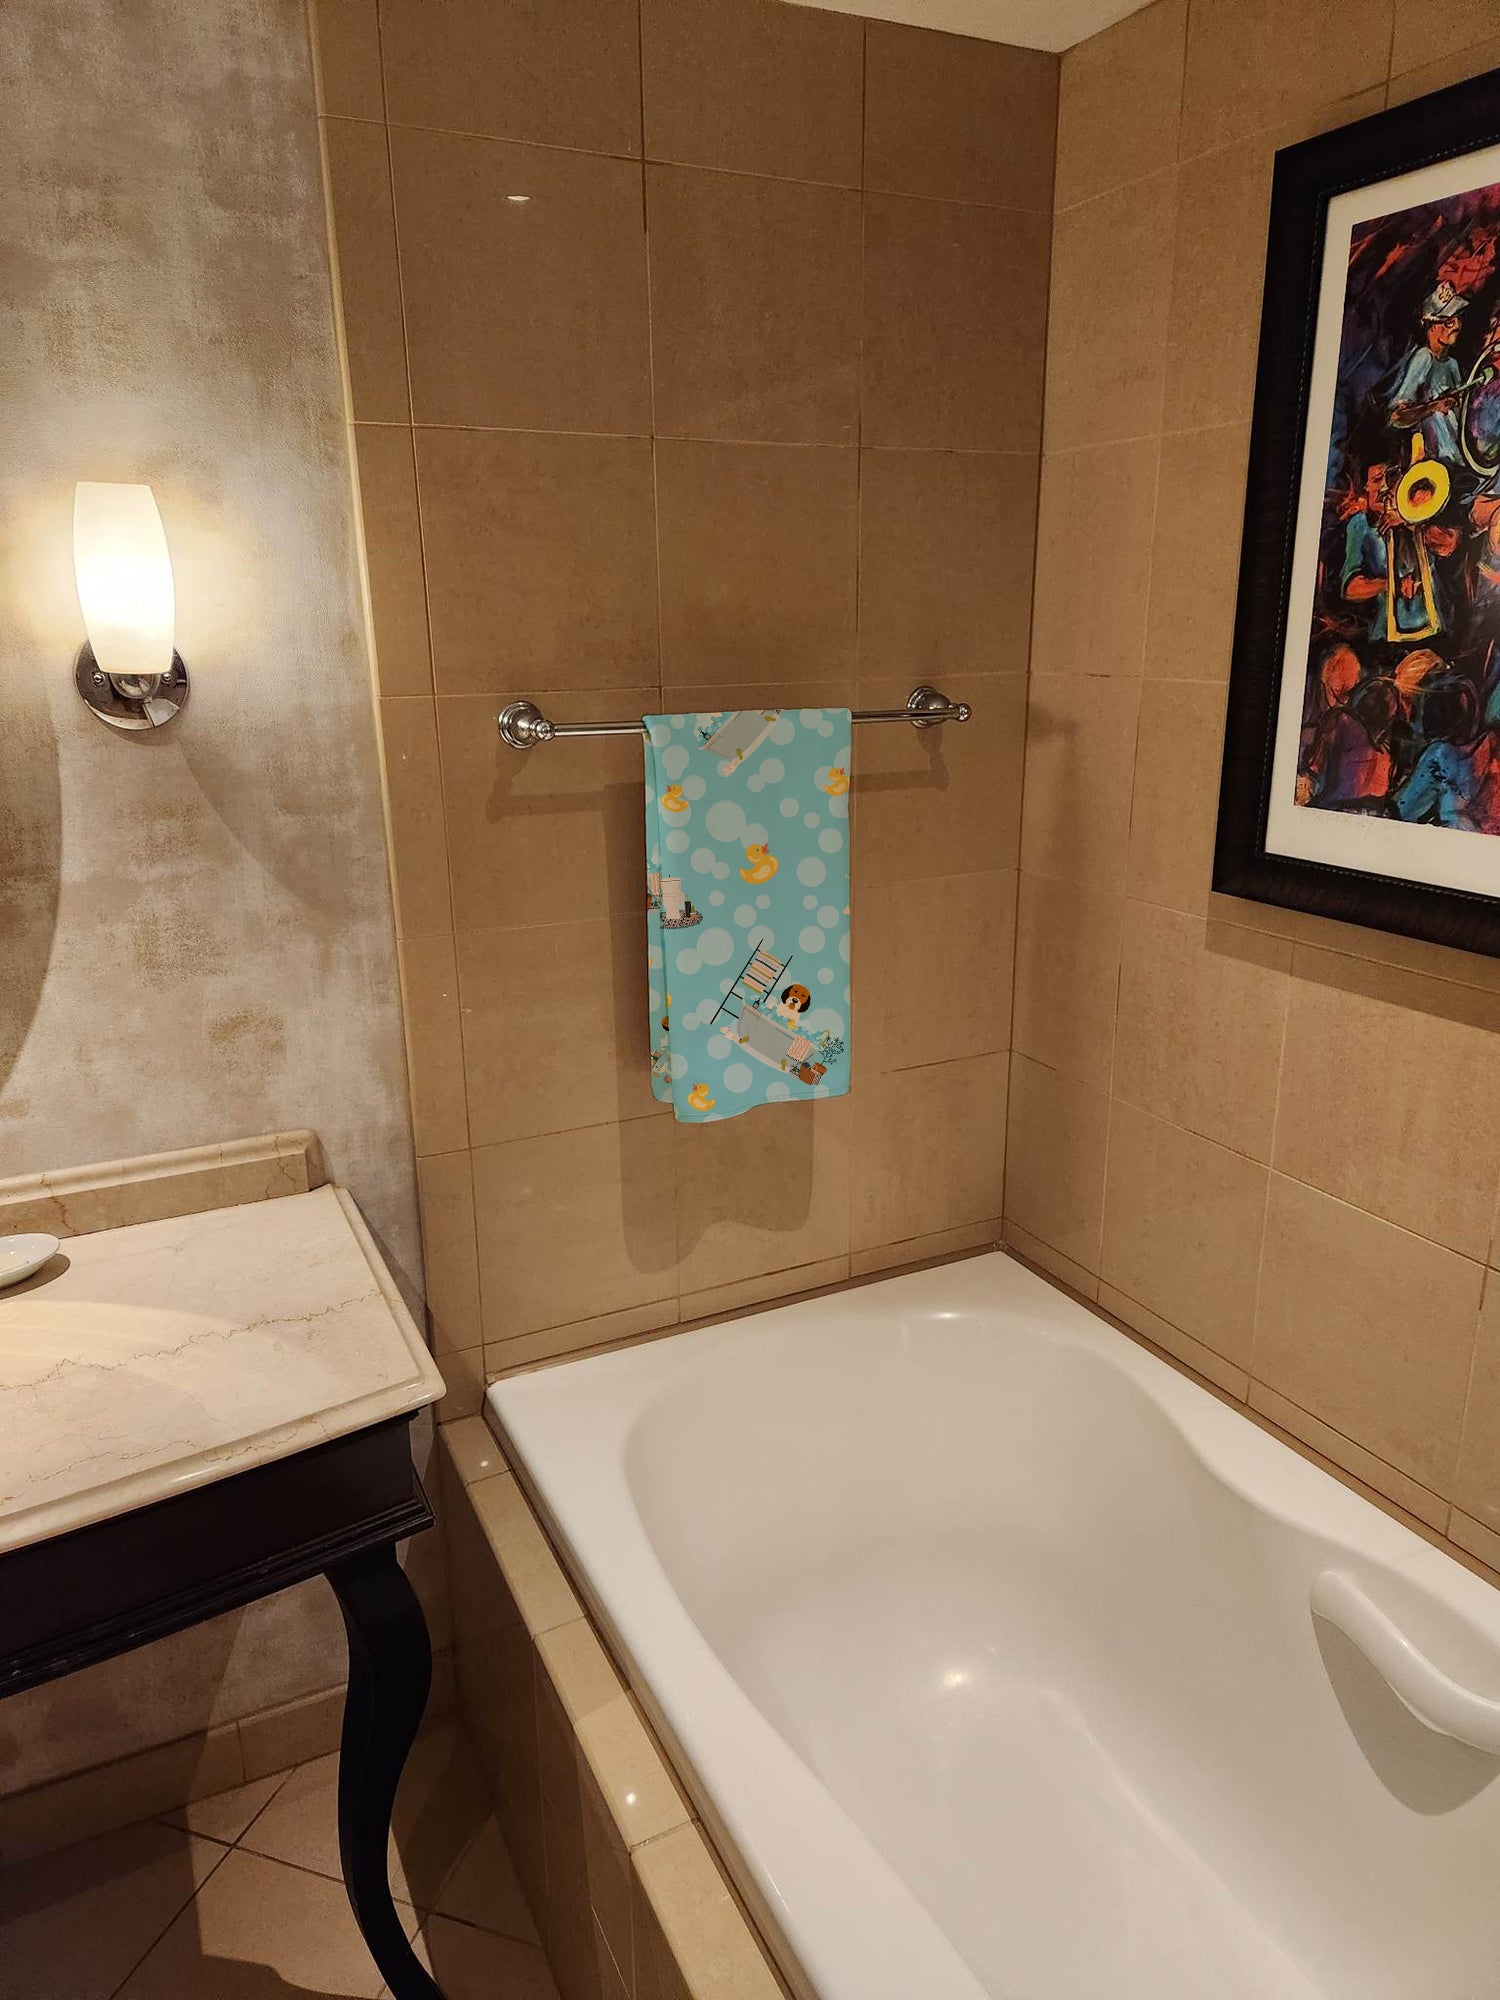 Buy this Petit Basset Griffon Veenden in Bathtub Bath Towel Large